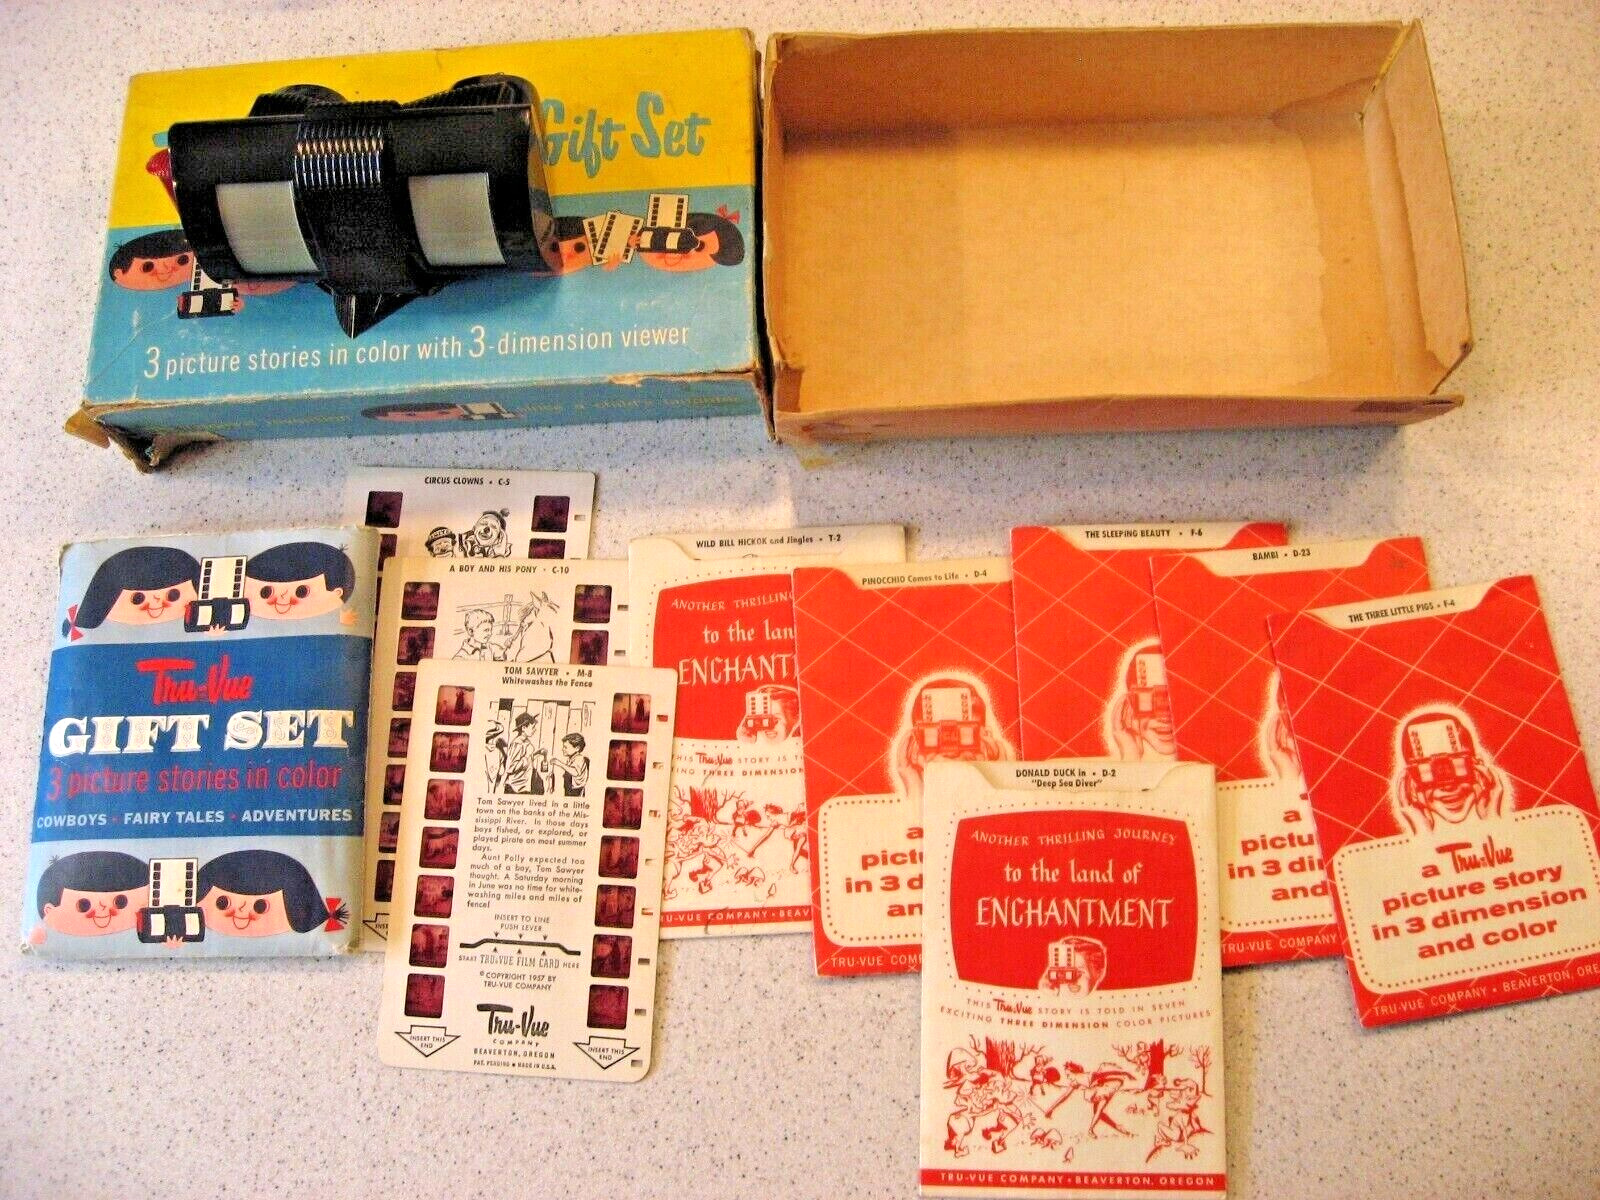 Vintage Tru-Vue Gift Set with Viewer, 3 Original Stories, and 6 Bonus Stories